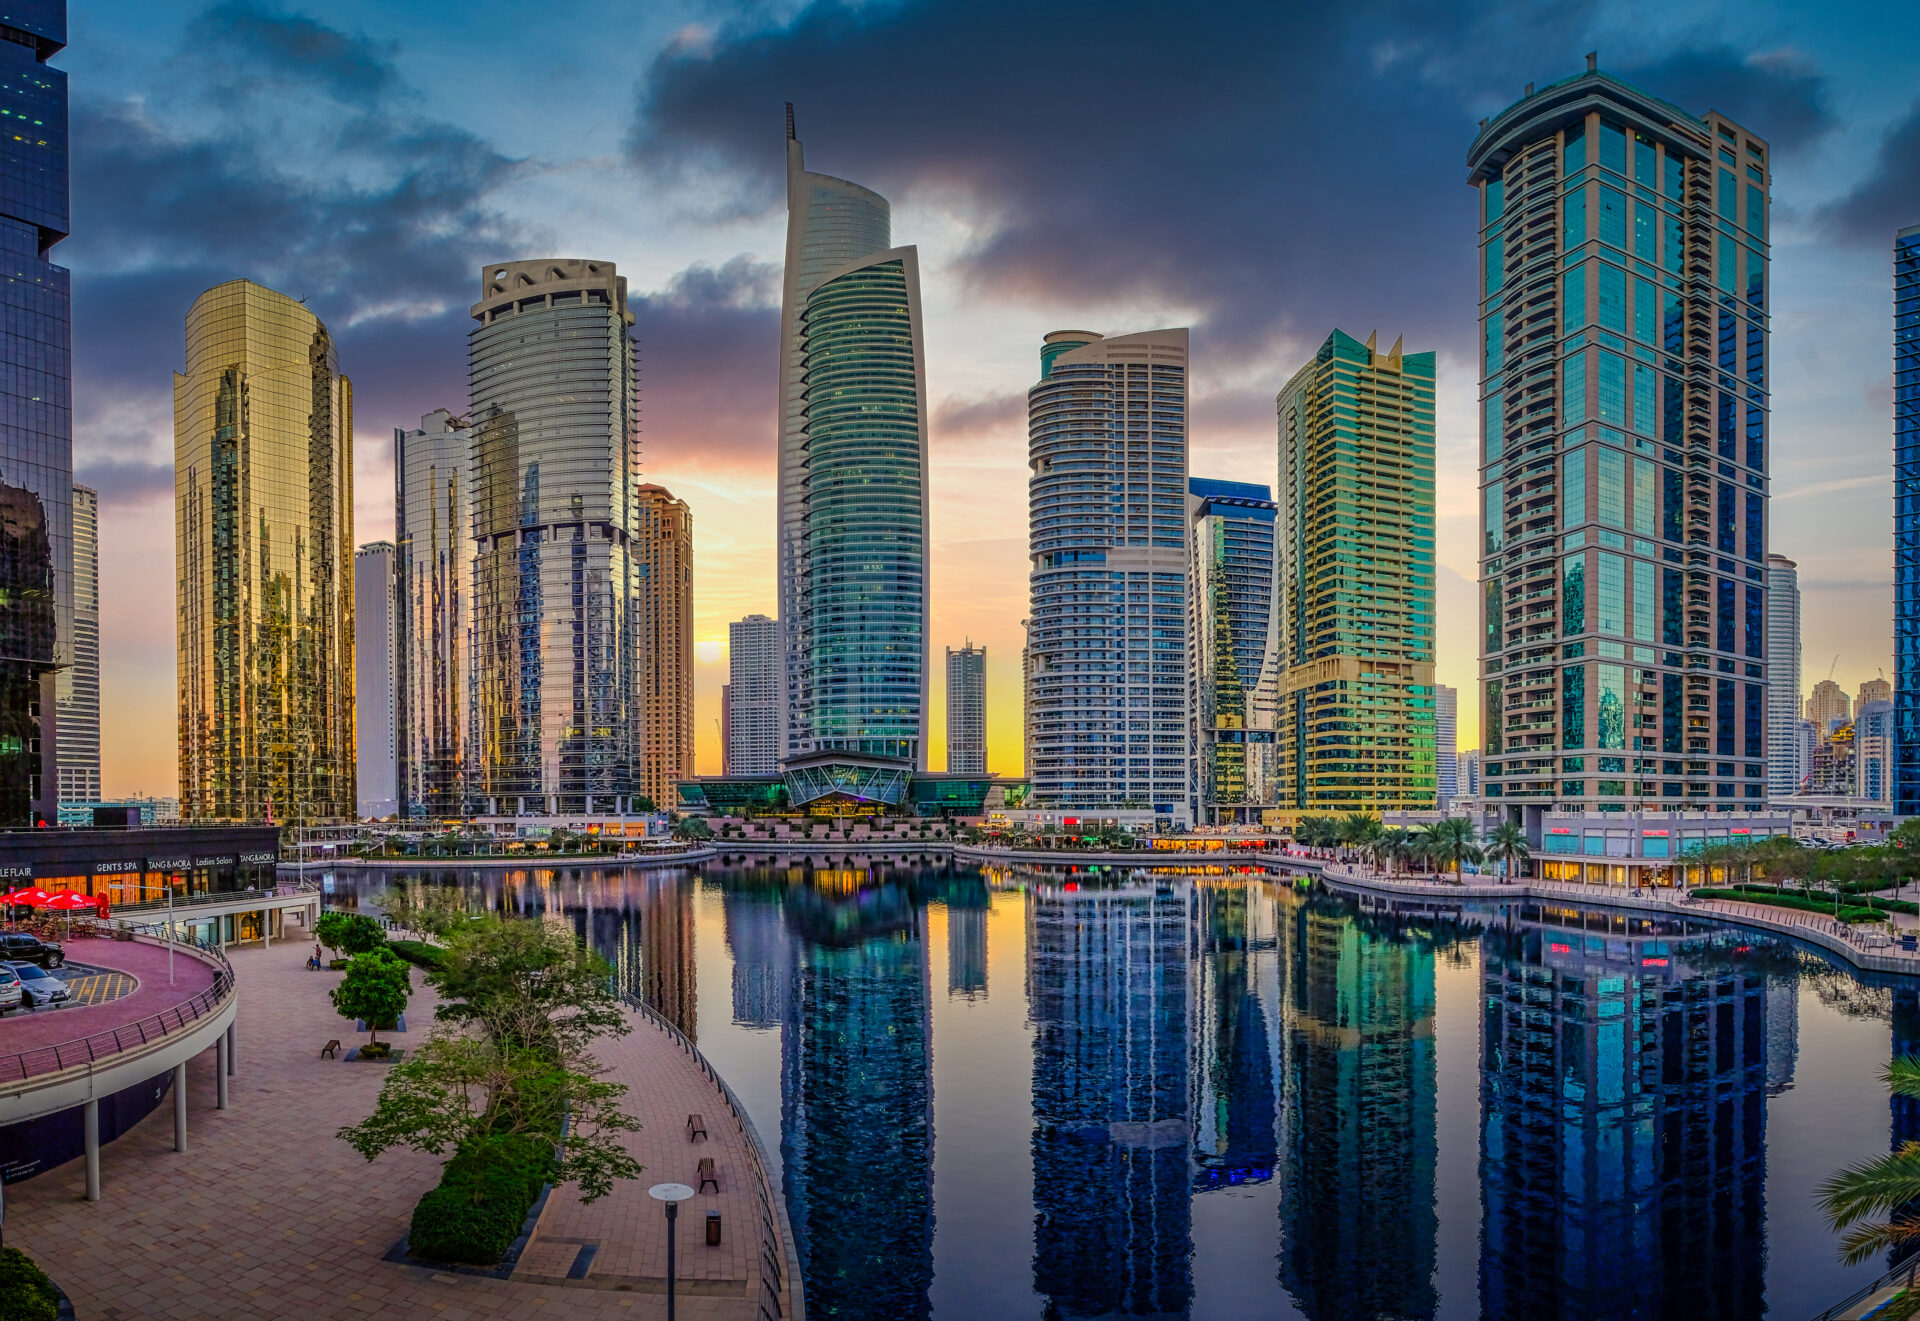 Best Dubai Areas for Tourists - JLT